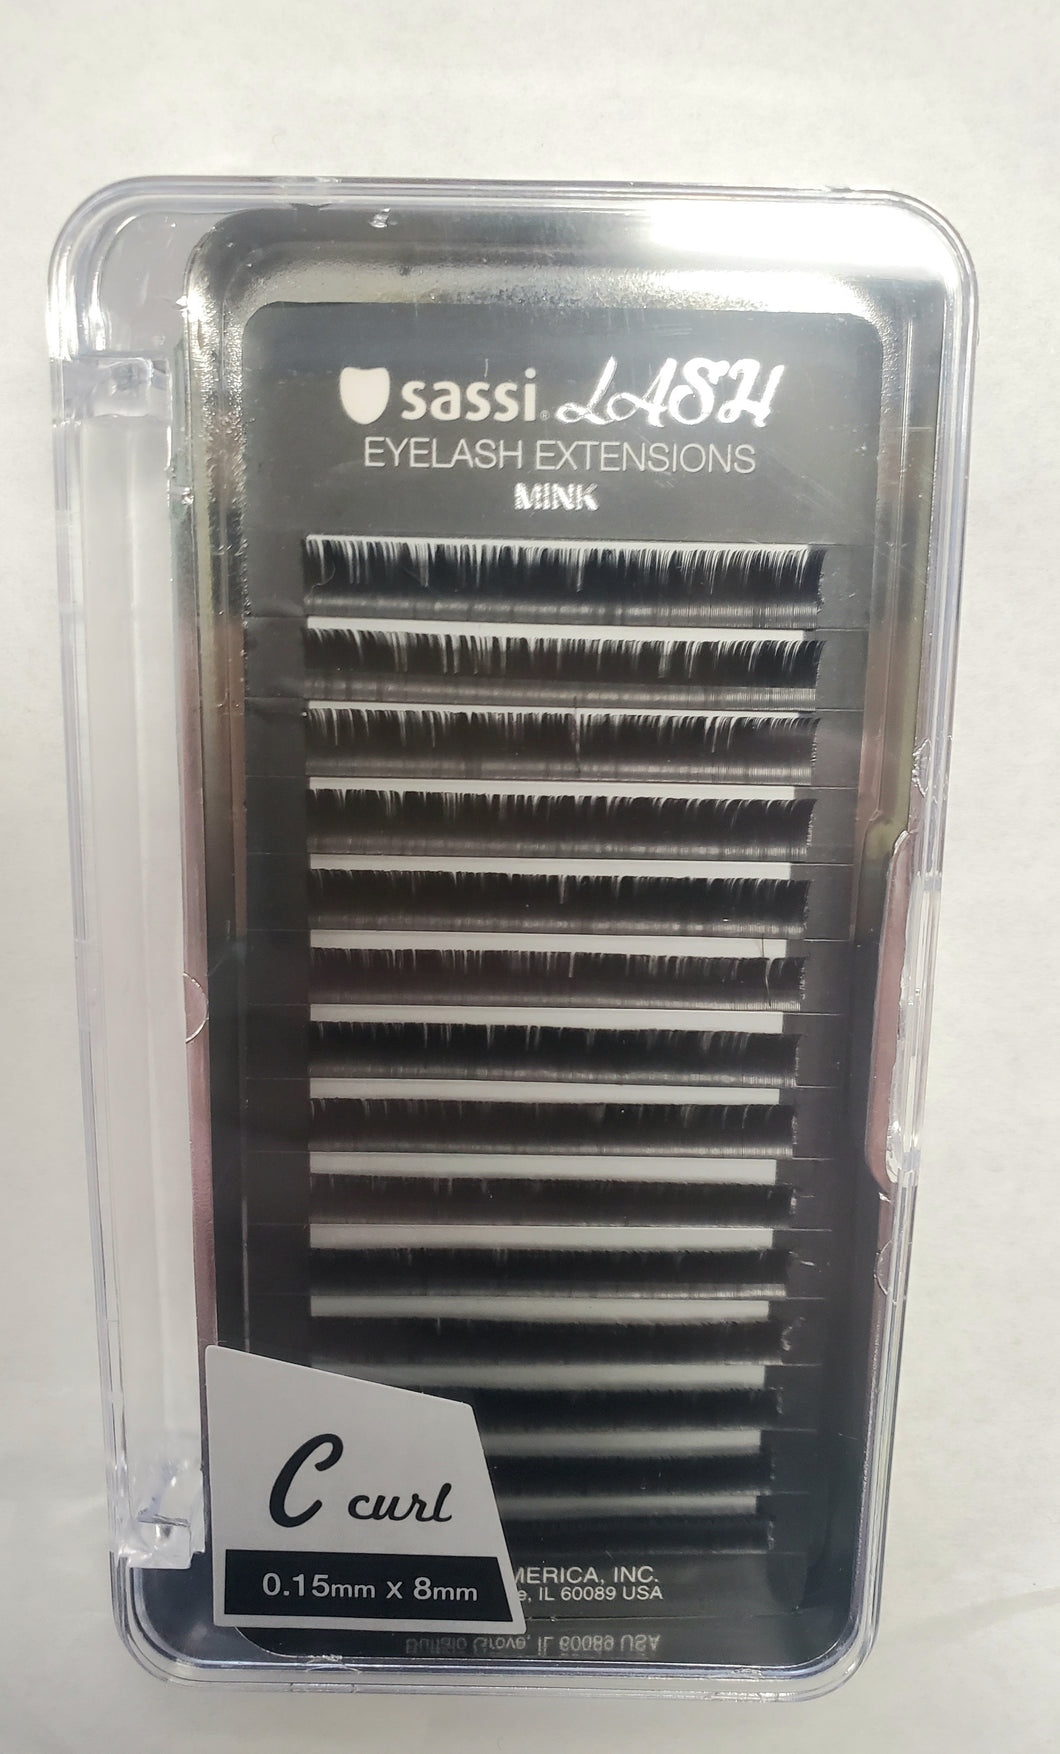 Sassi lash eyelash extentions mink C-curl 0.15mm×8mm